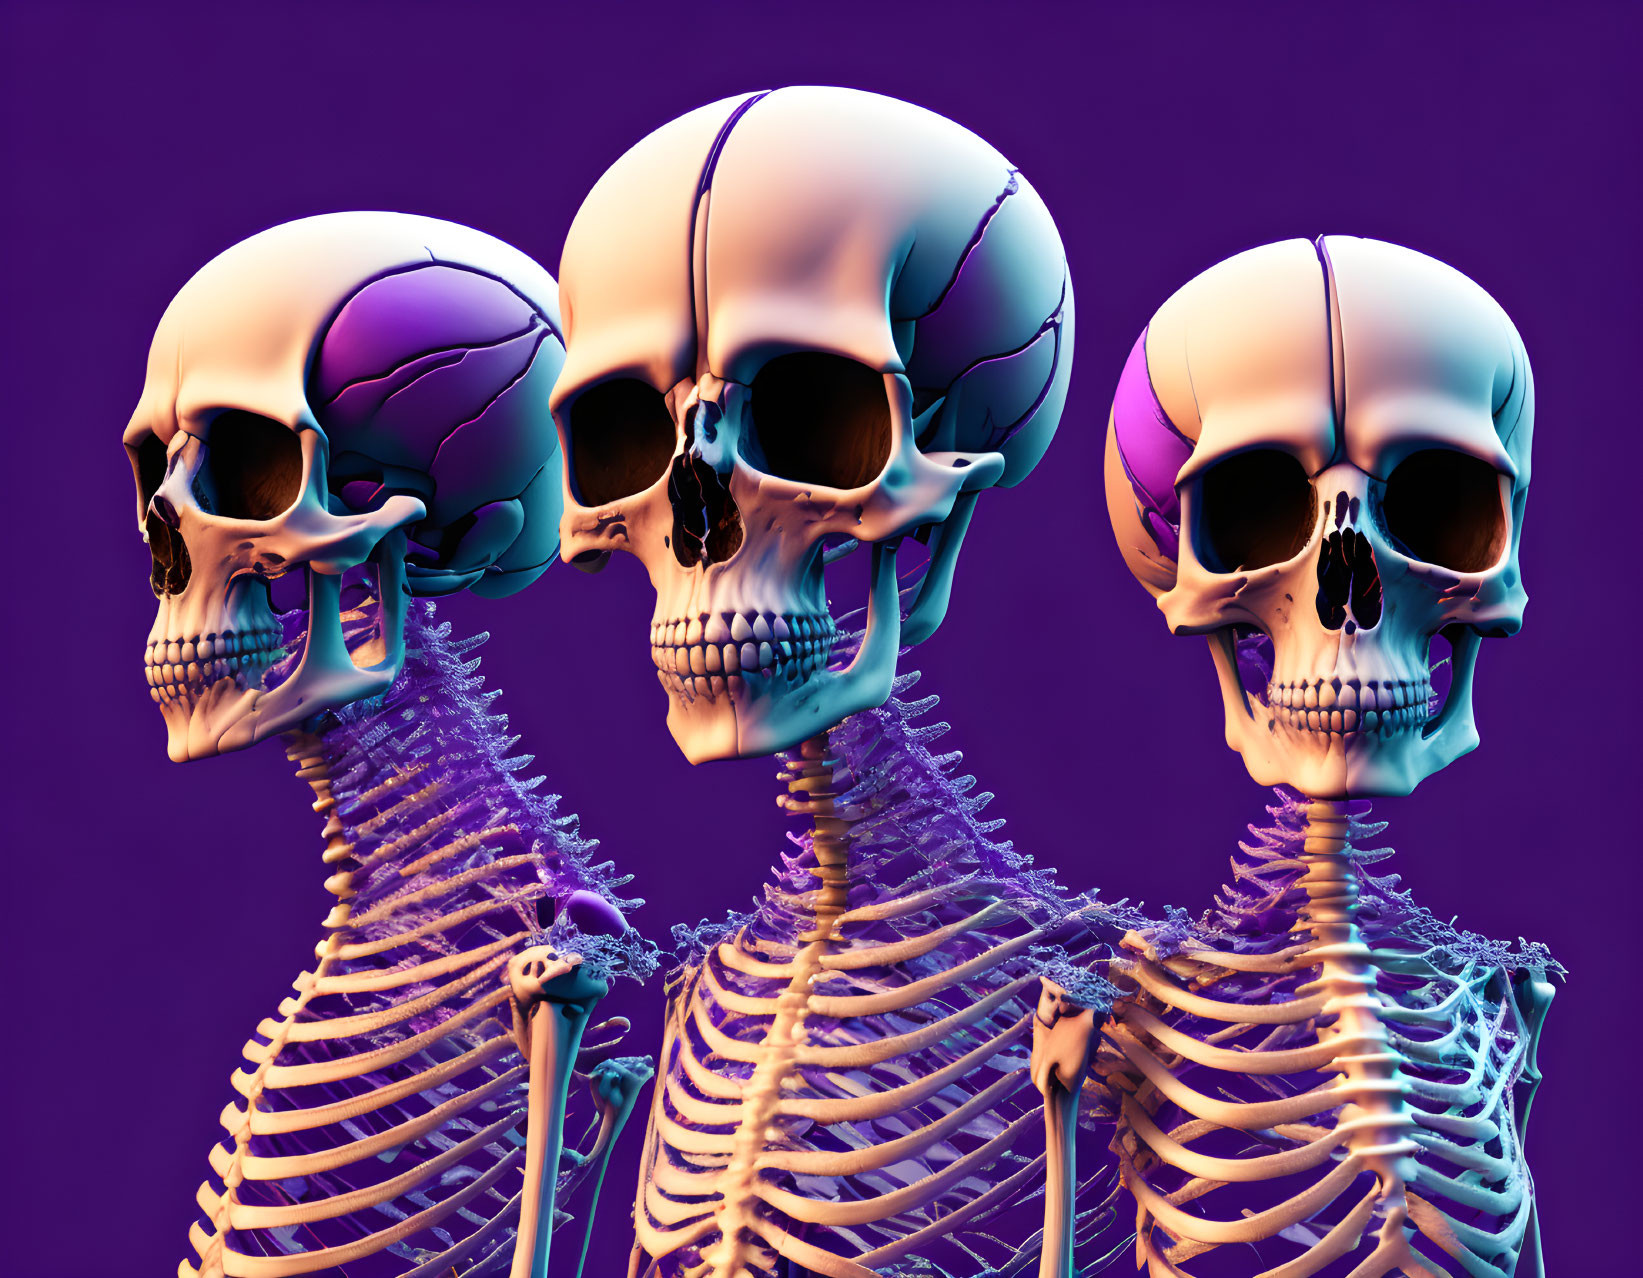 Bad posture skeletons :p